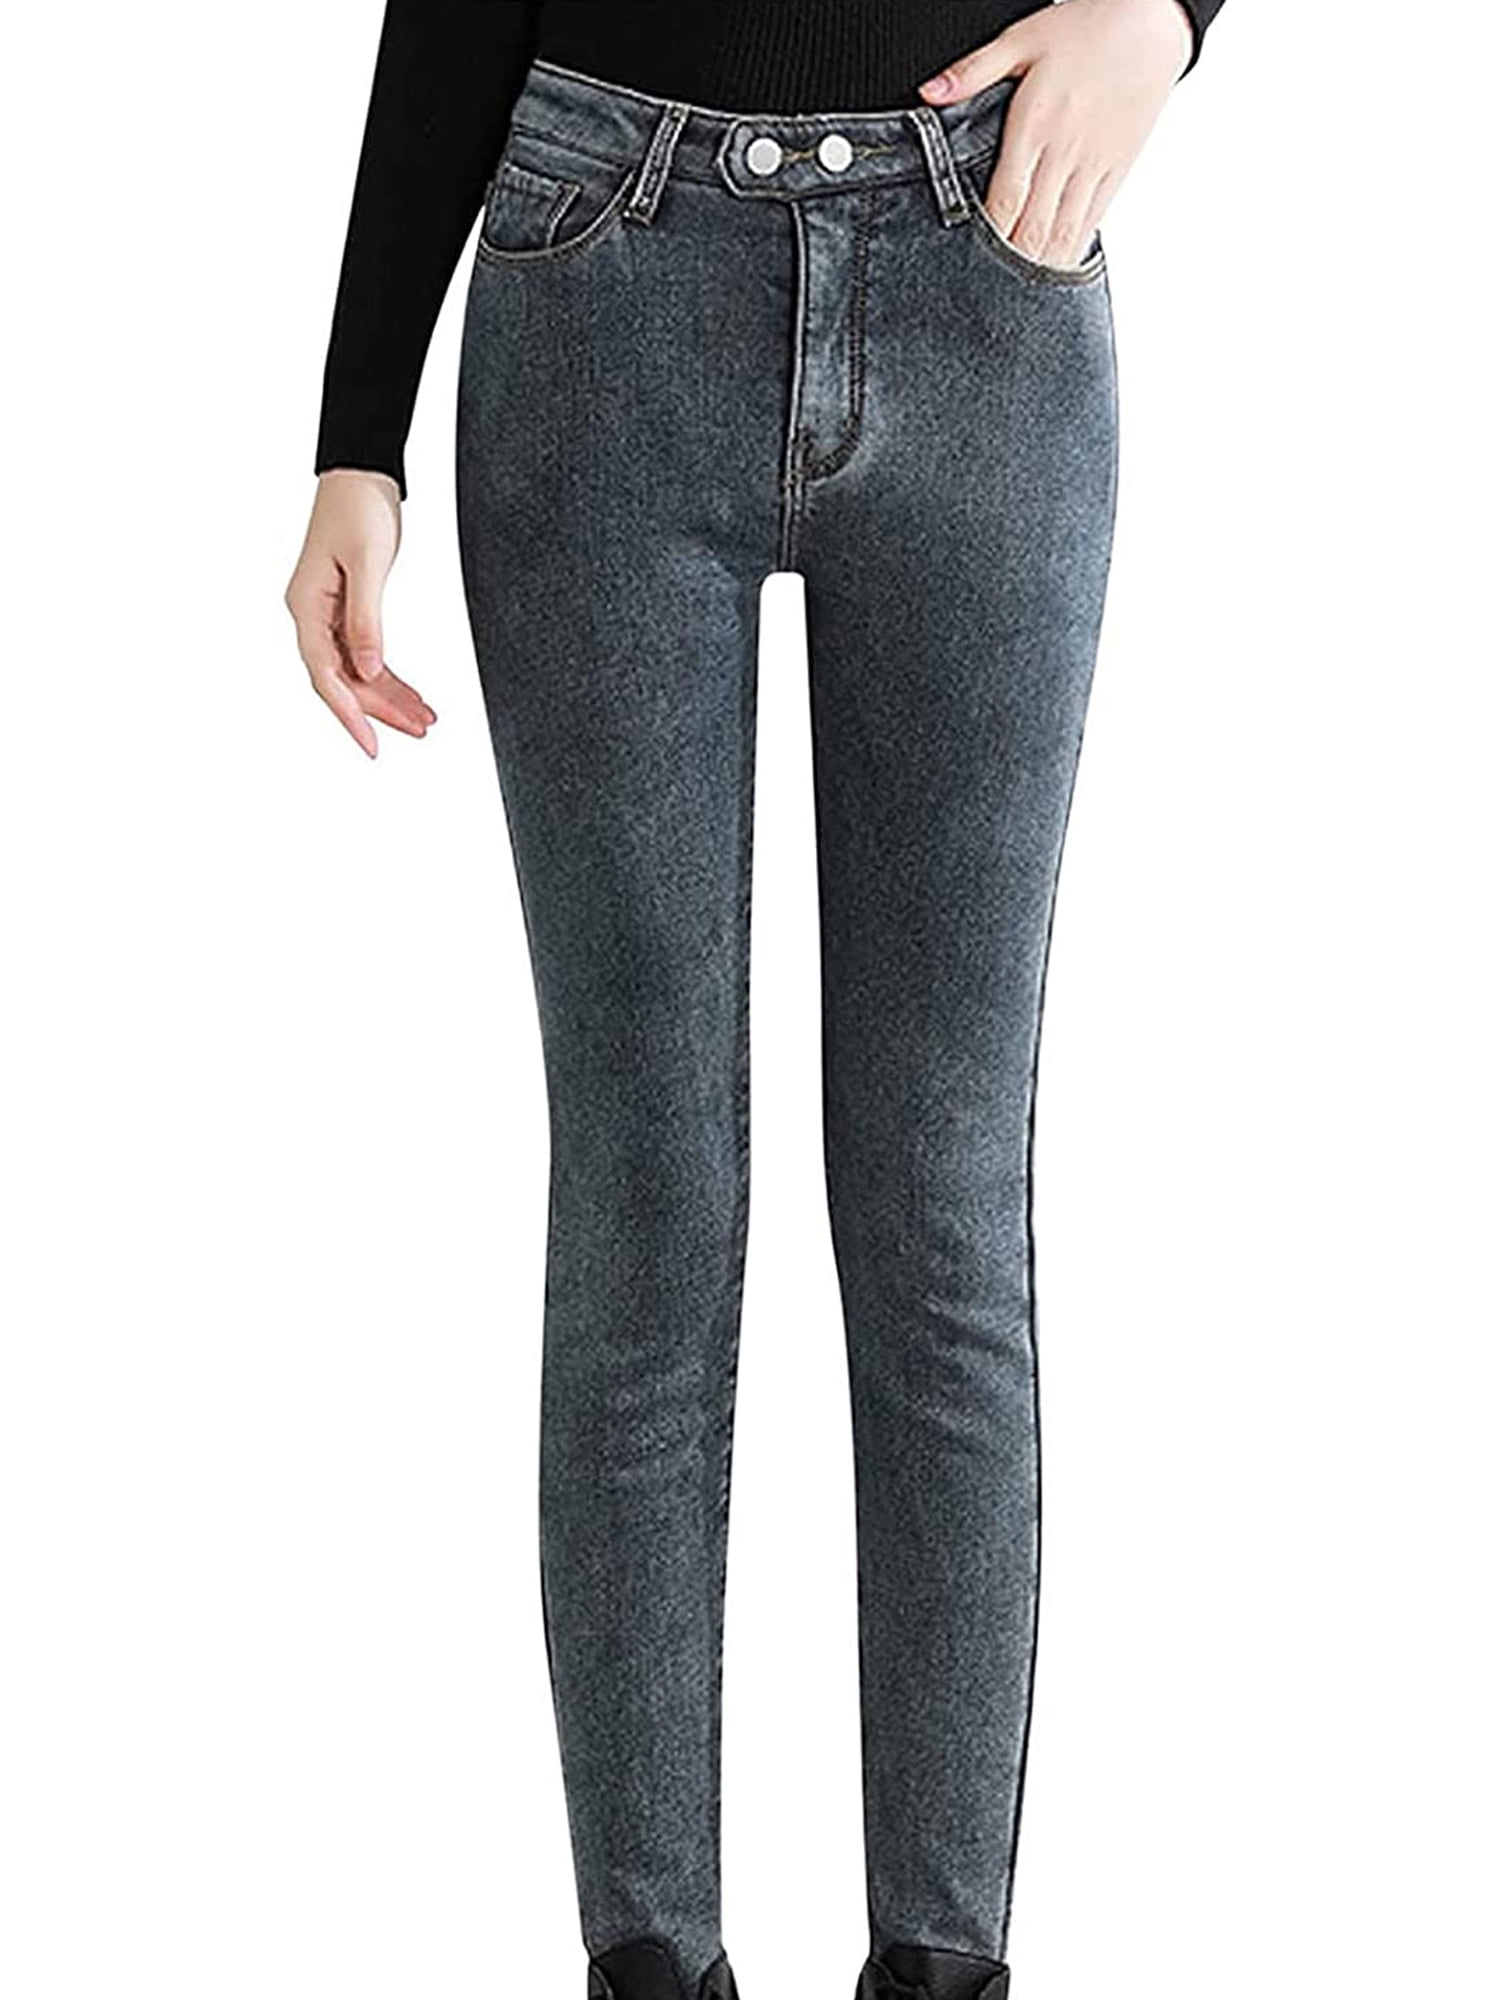 Womens Thermal Fleece Denim Jeans Trousers Winter Warm Stretch Leggings Pants